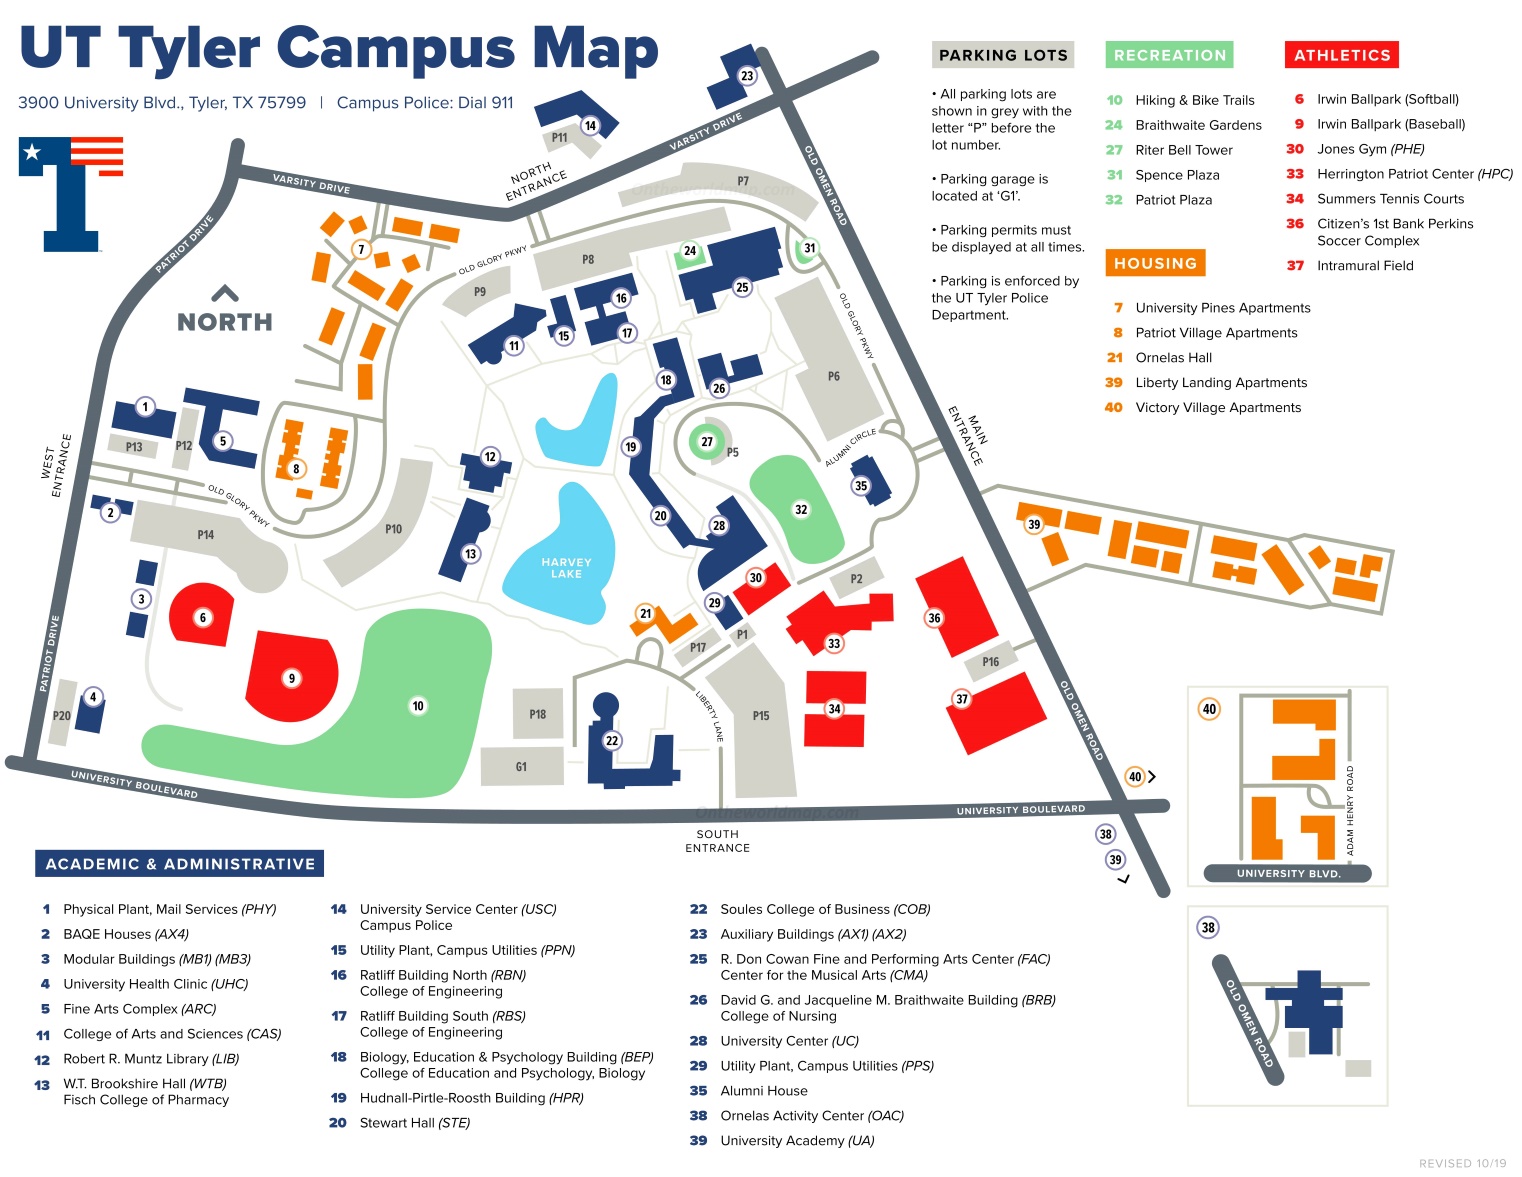 University of Texas at Tyler Campus Map - Ontheworldmap.com